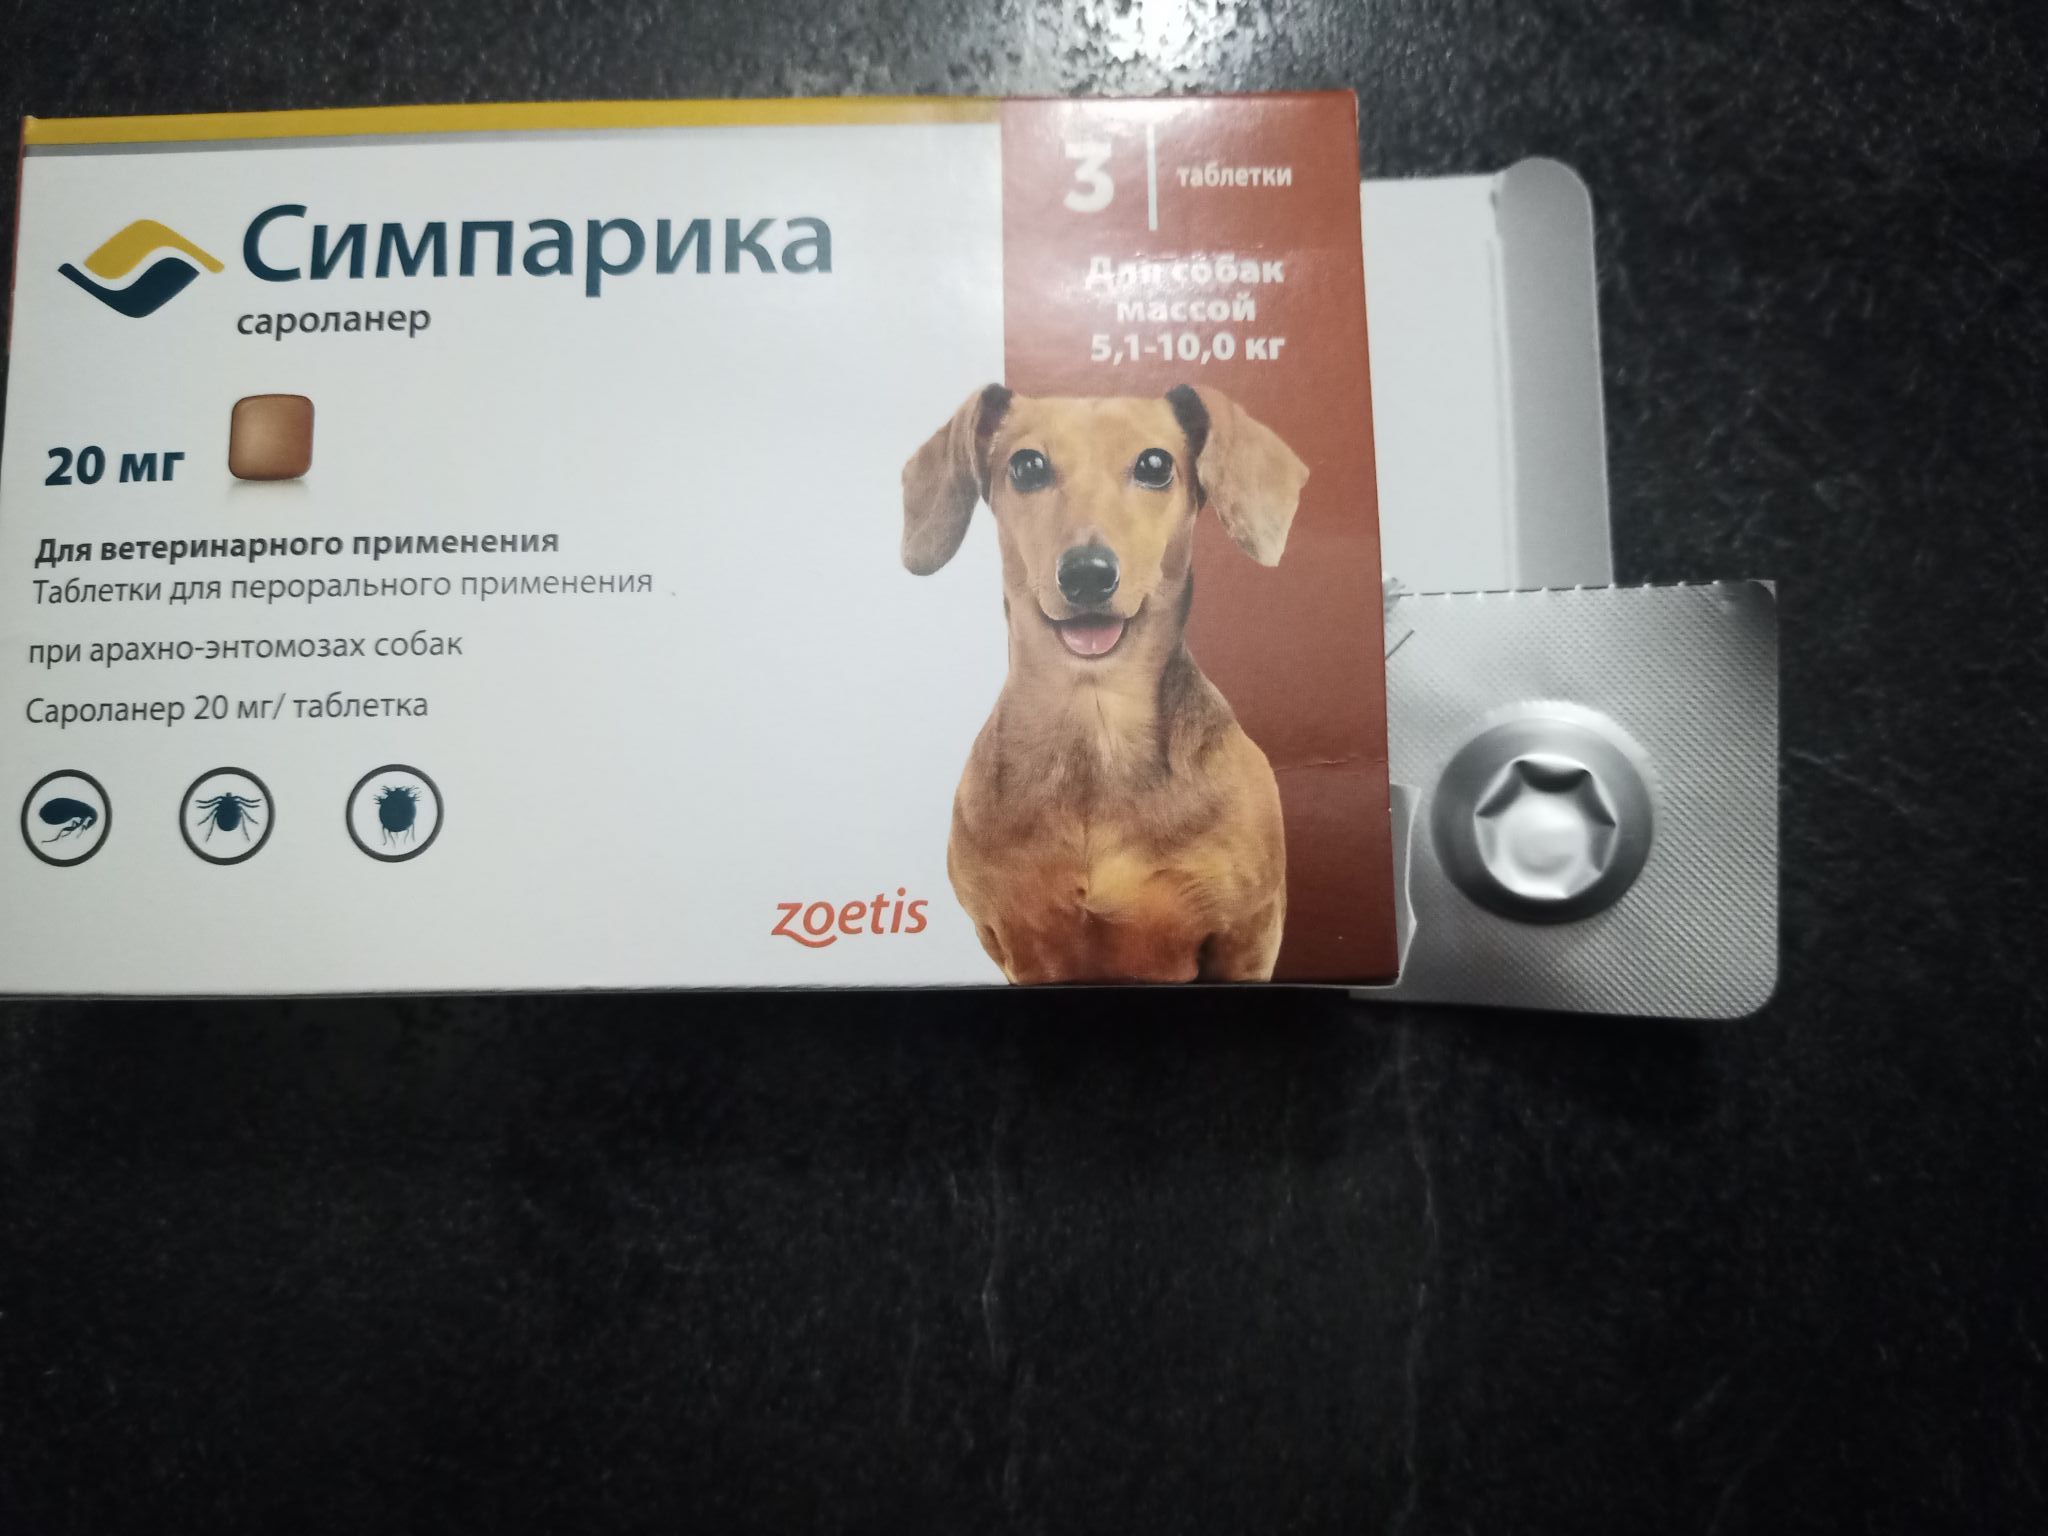 Симпарика таблетка для собак спб. В продаже появилась Бравекто и Симпарика объявление.